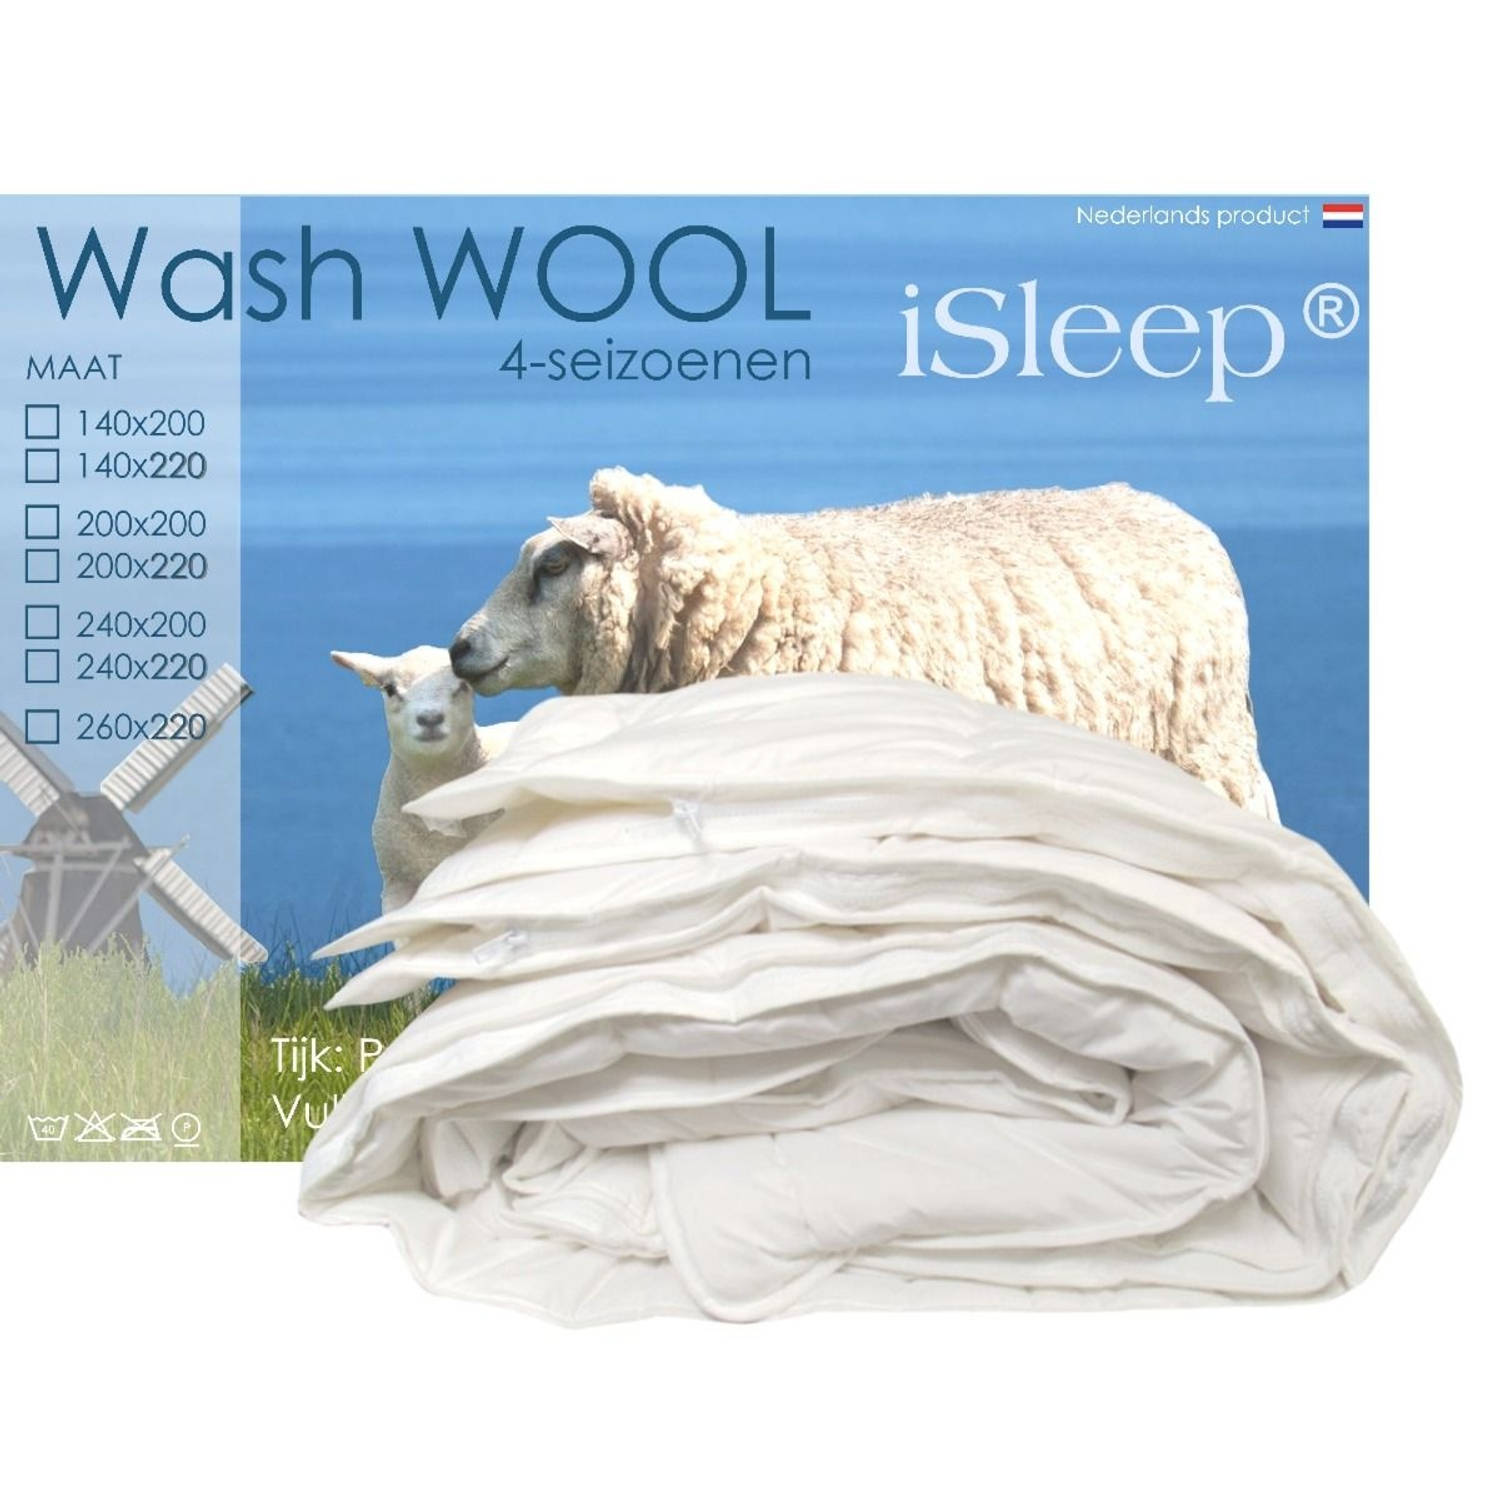 iSleep Wash Wool wollen 4-seizoenen dekbed wasbare wol 2-Persoons 200x220 cm